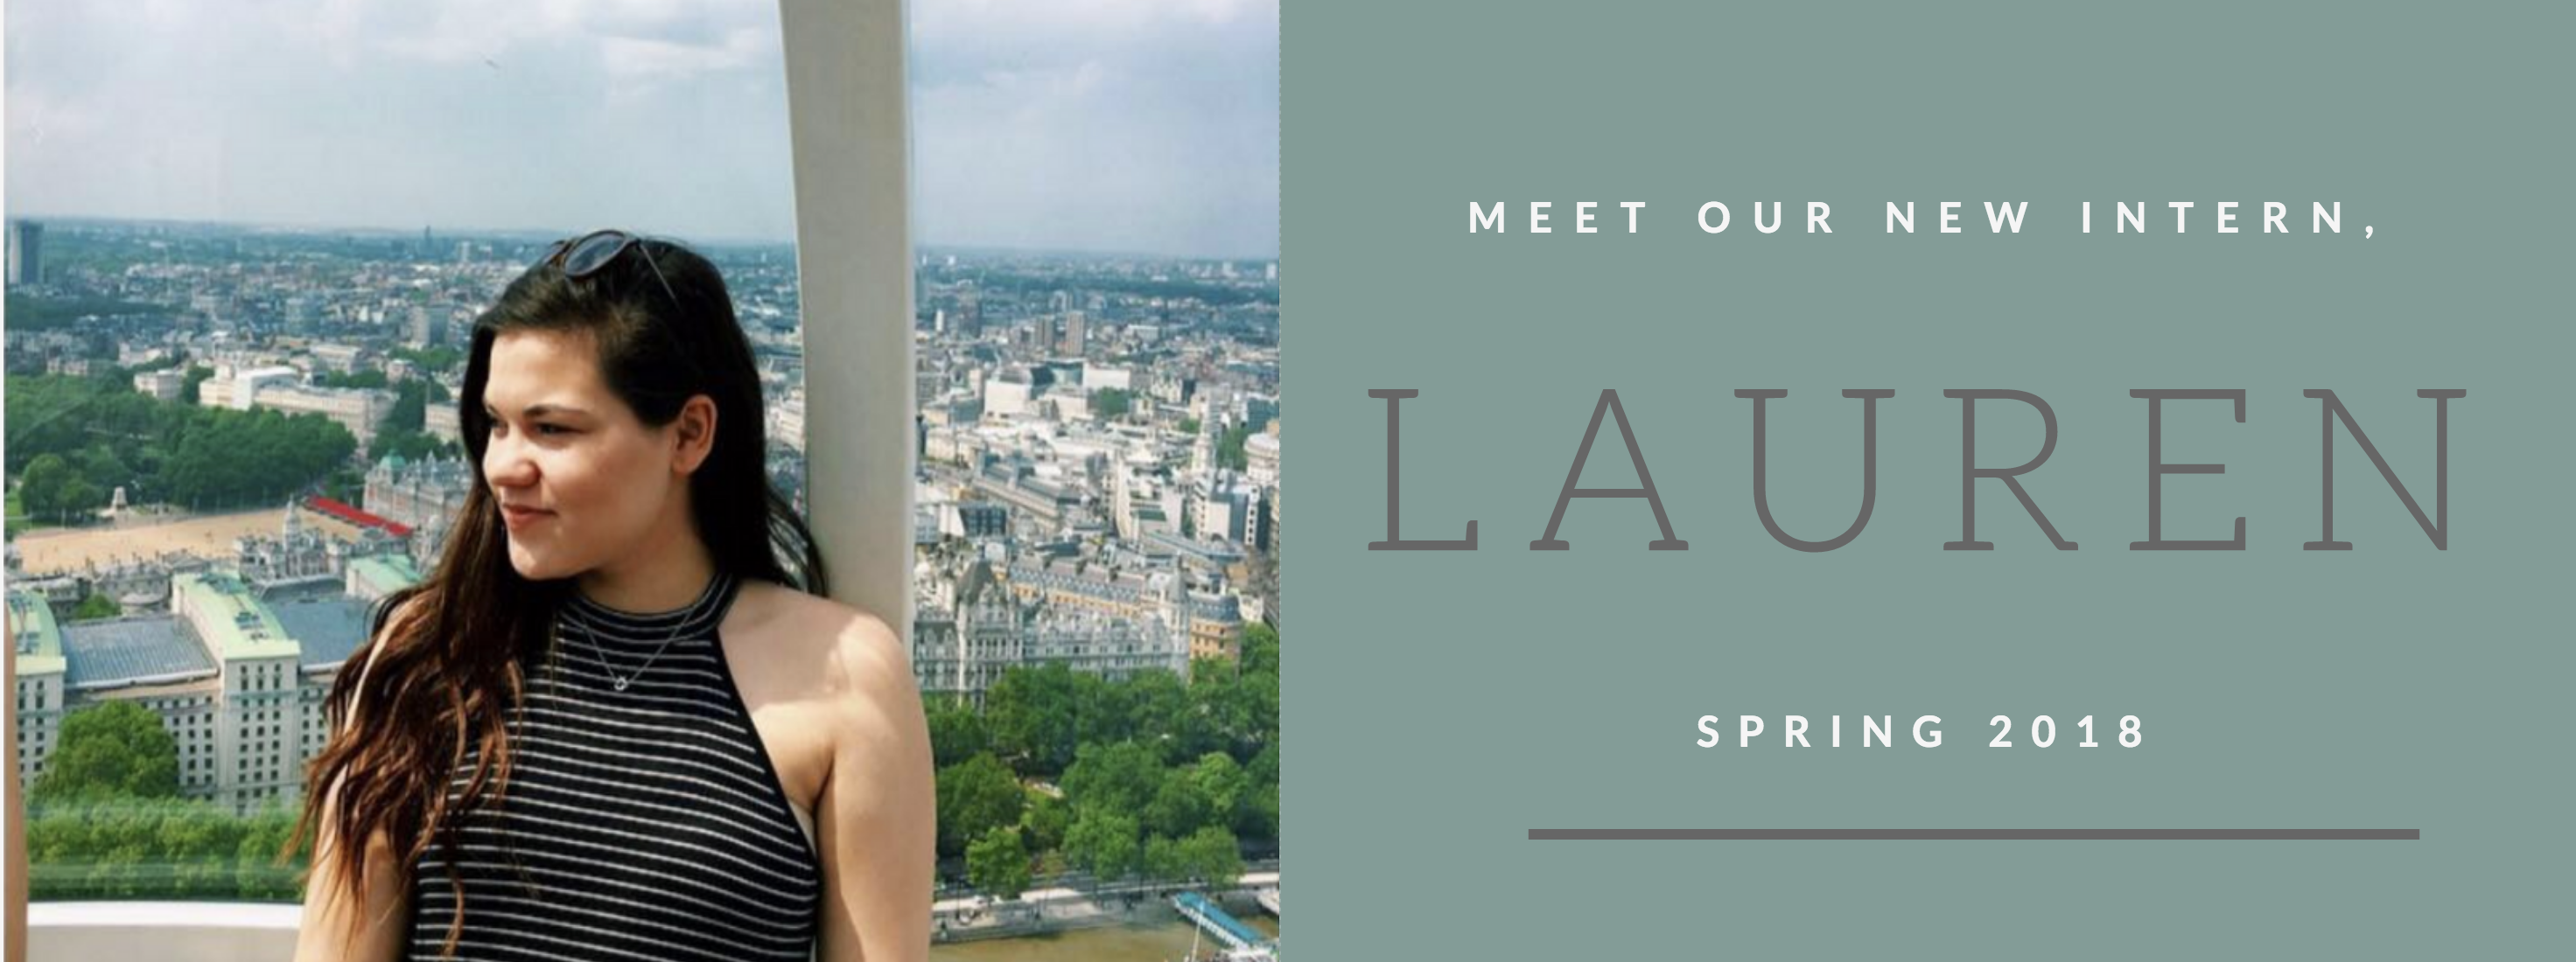 Meet Our New Team Member, Lauren!